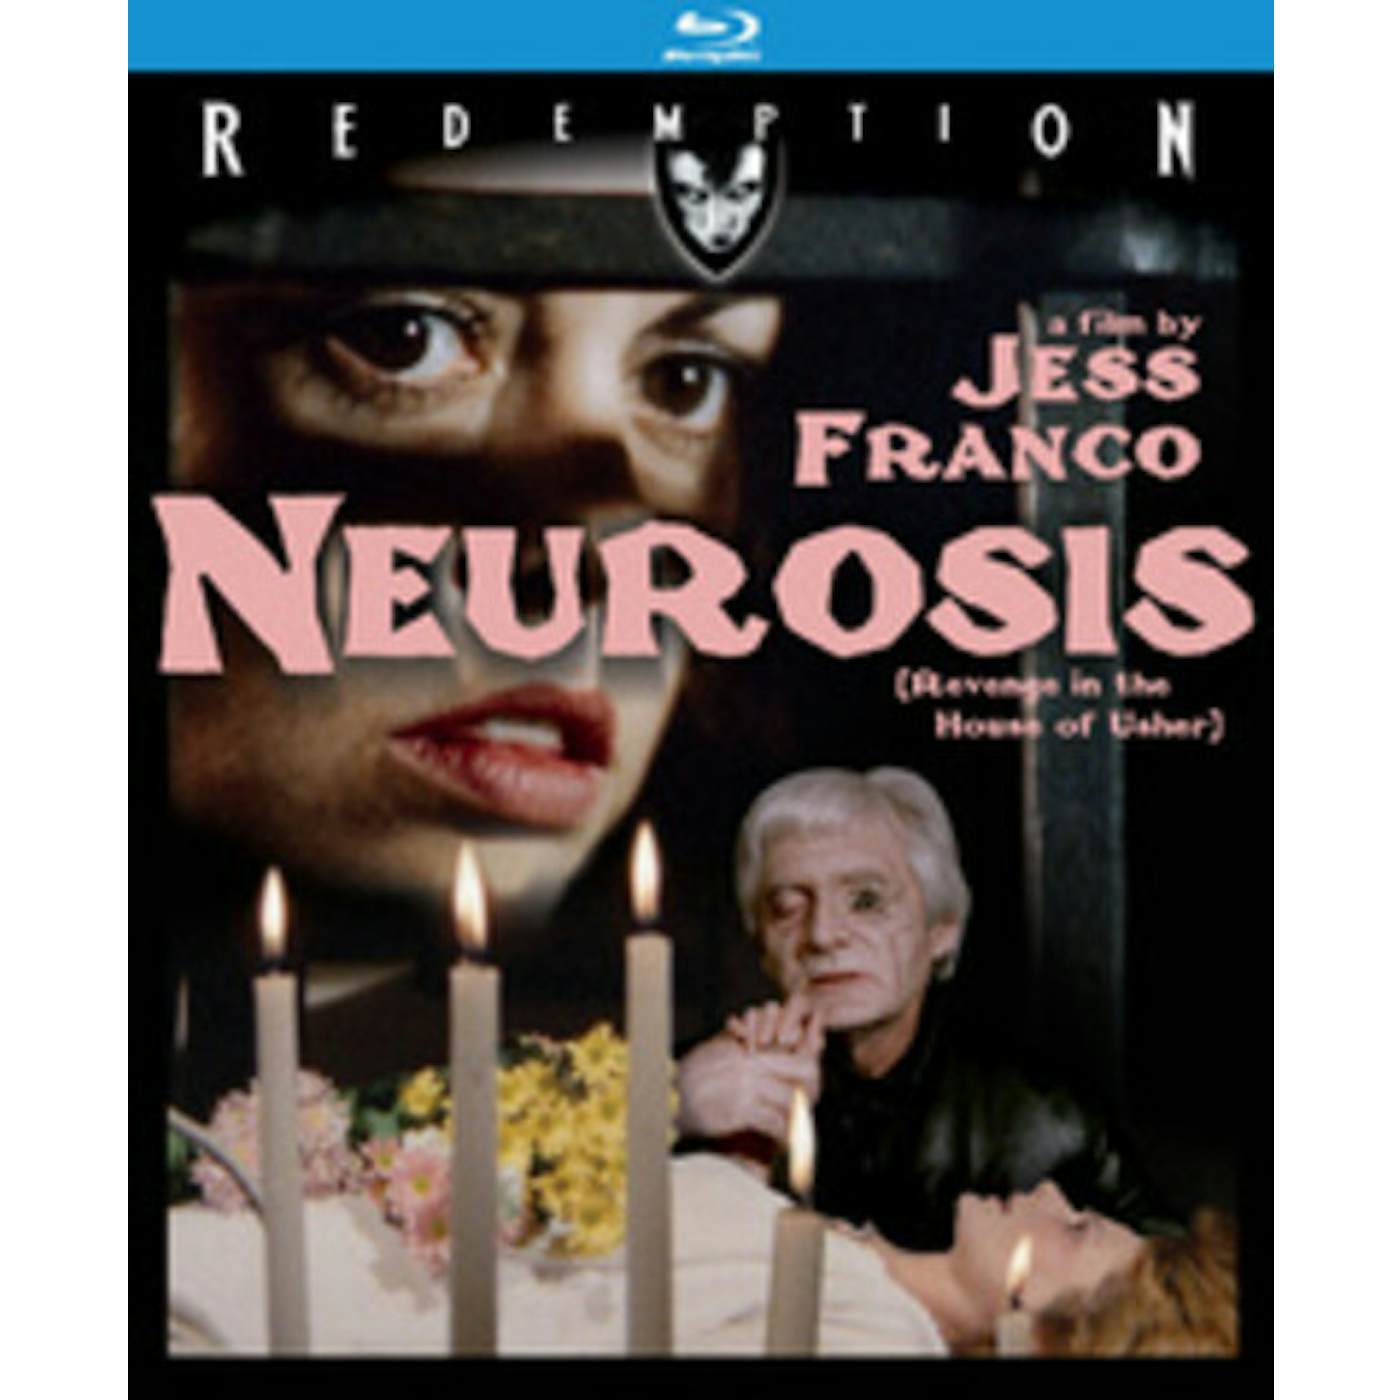 NEUROSIS (1985) Blu-ray